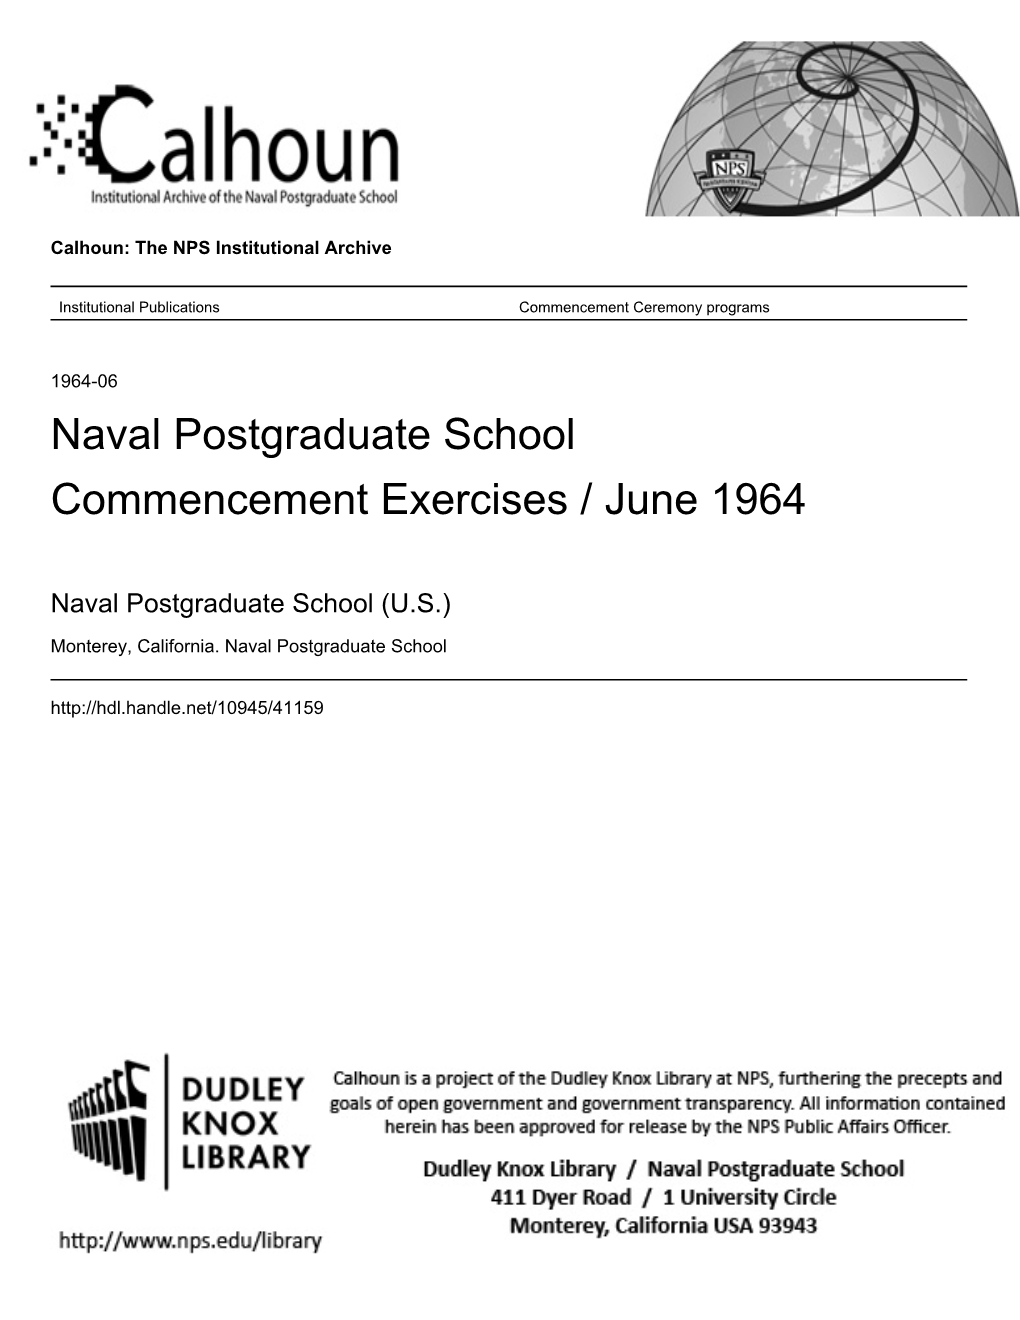 Naval Postgraduate School Commencement Exercises / June 1964